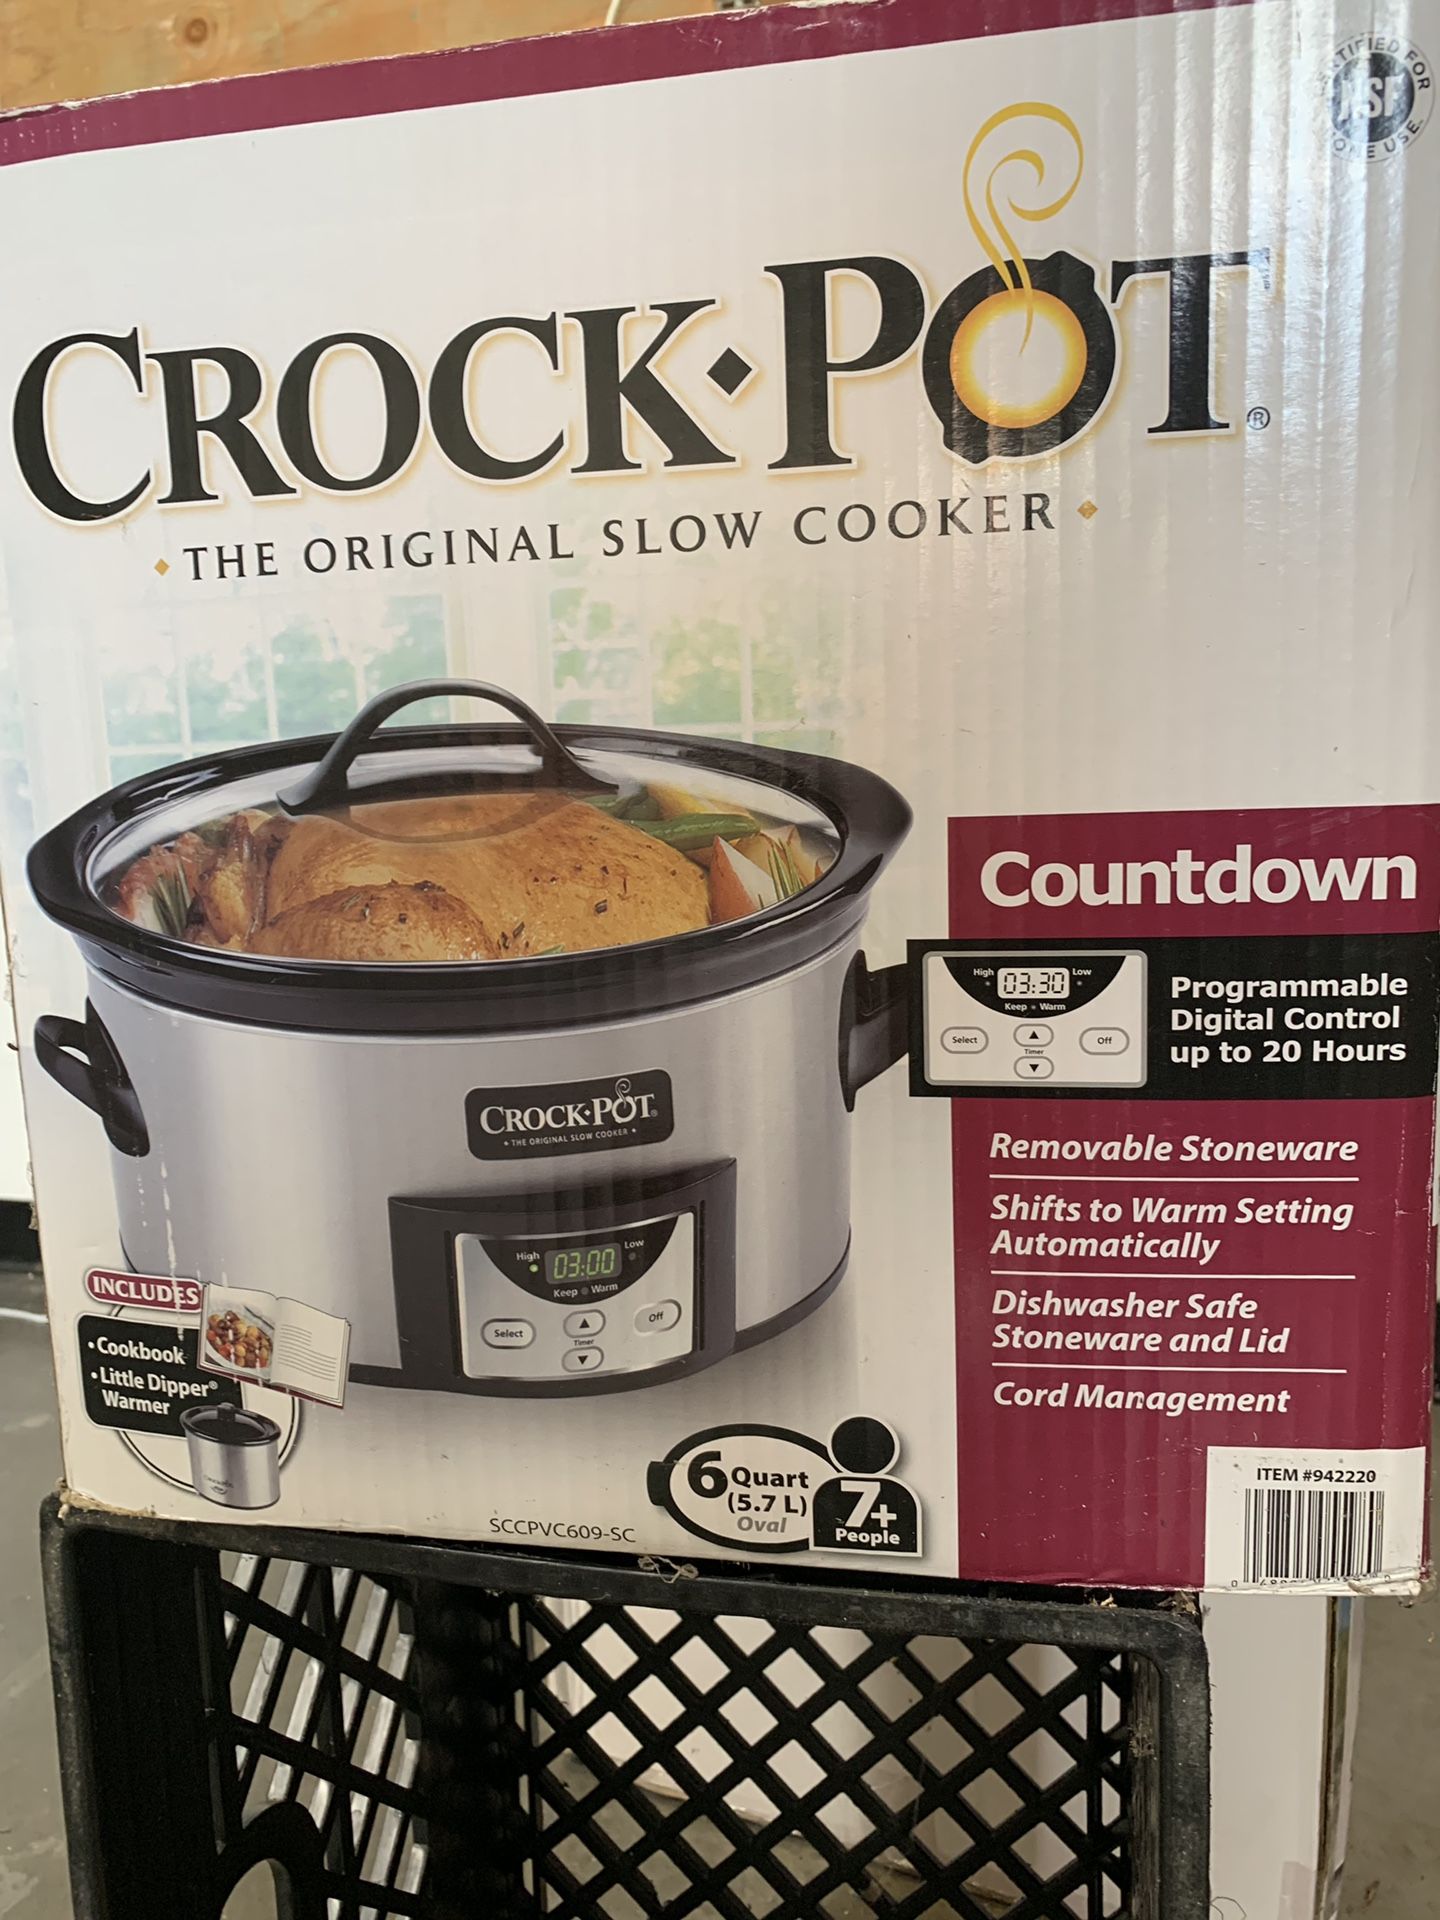 Crockpot crock-pot 6 quart slow cooker programmable